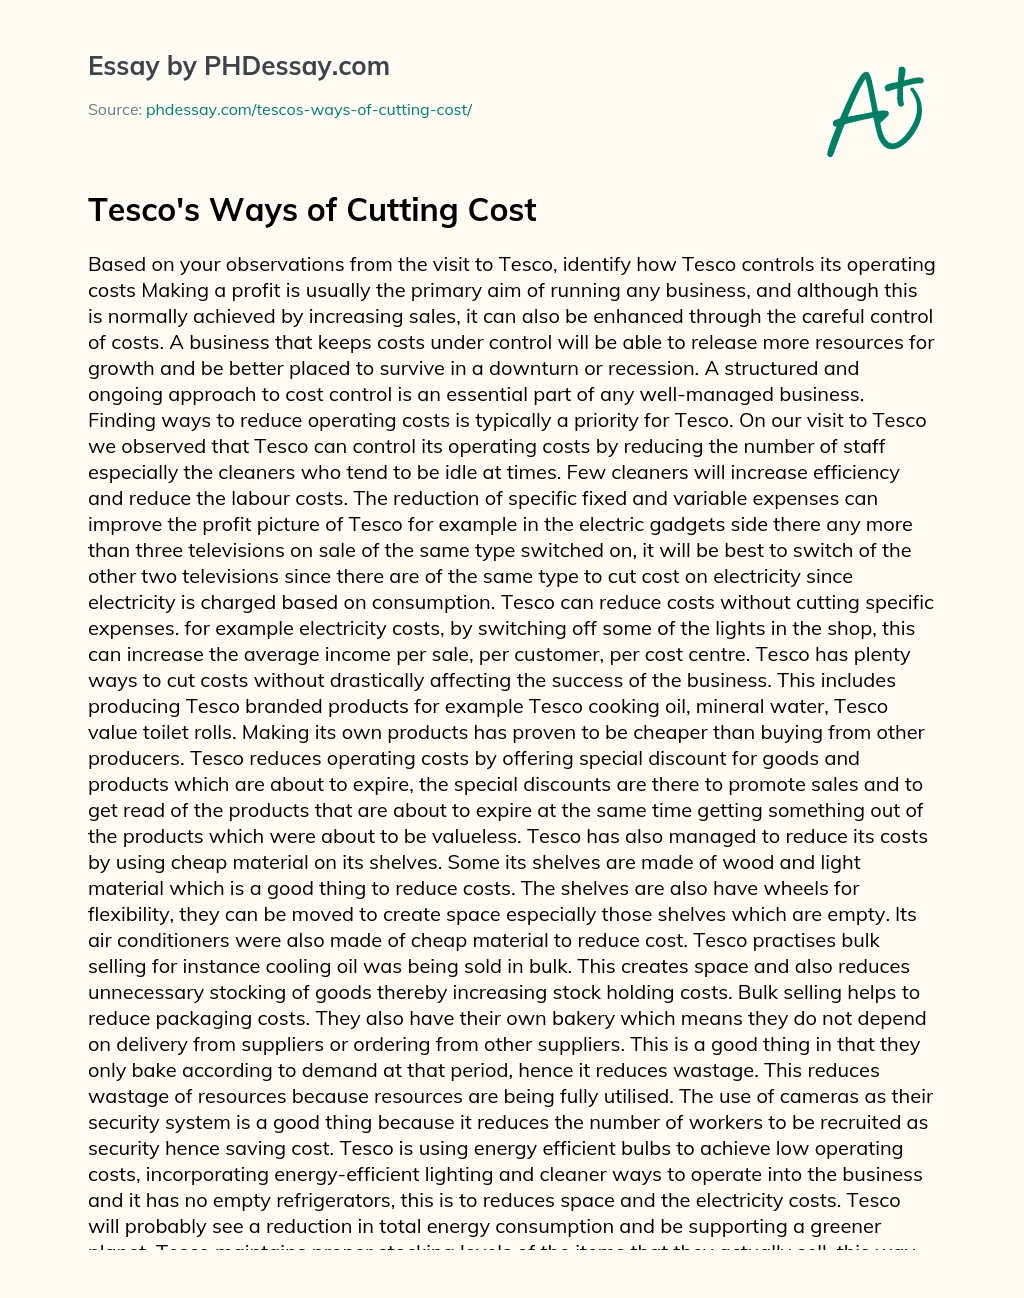 Tesco’s Ways of Cutting Cost essay